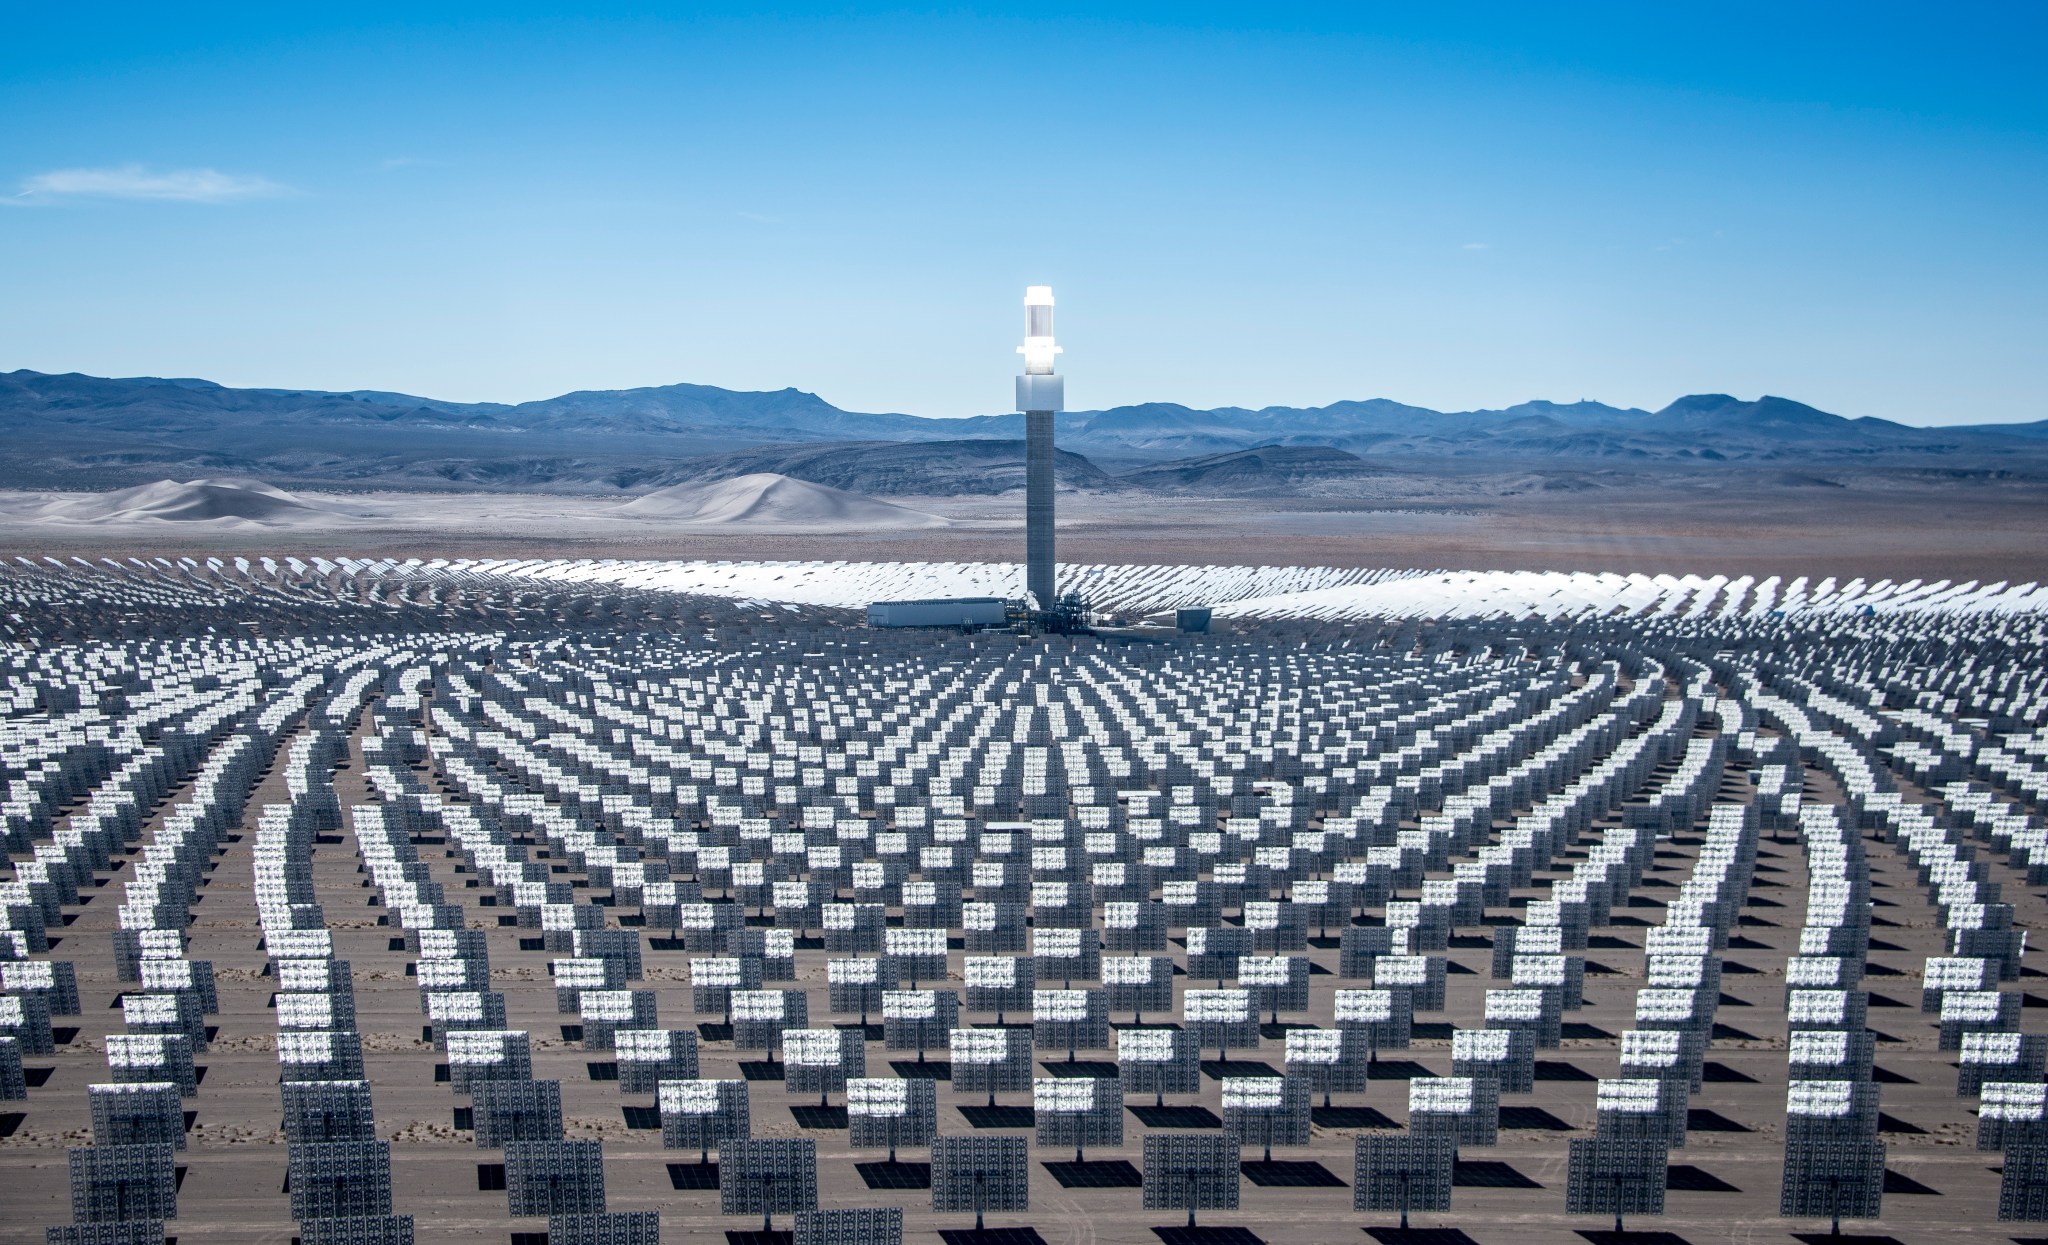 The Crescent Dunes Solar Energy Plant